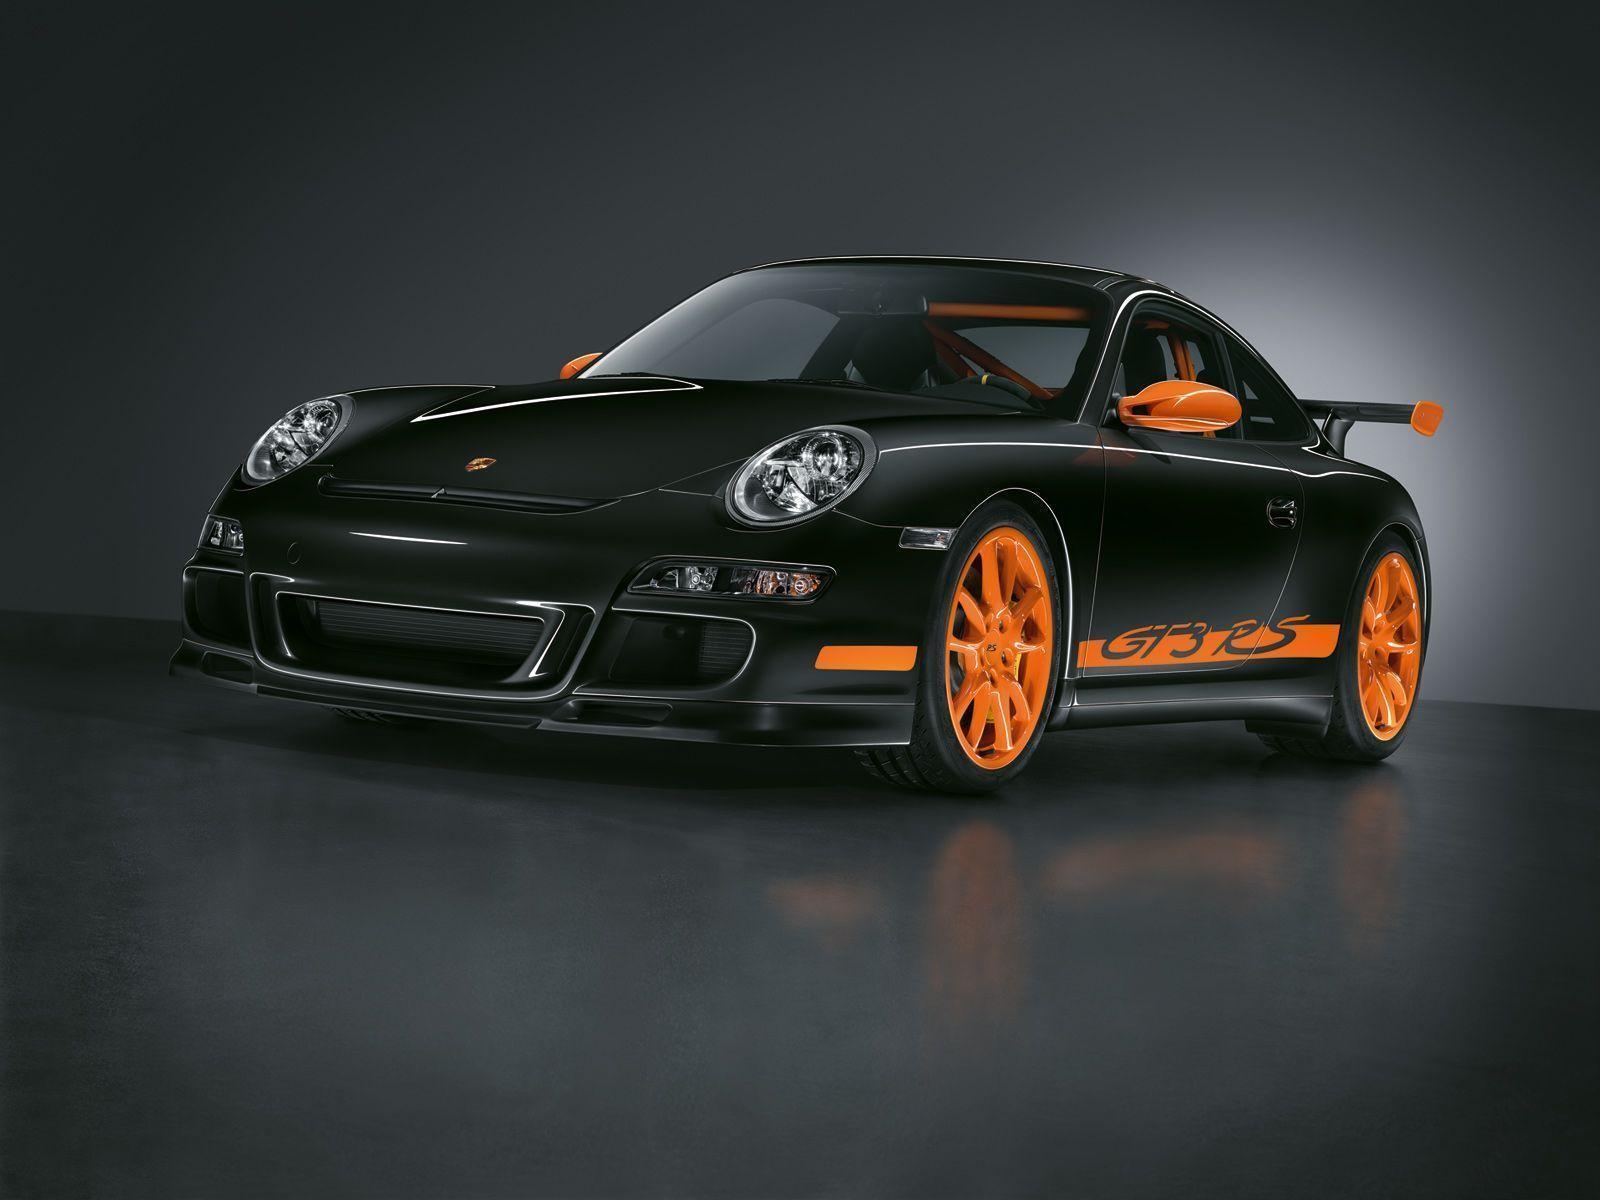 Porsche 911 GT3 RS HD Picture Wallpaper Download. CarsWallpaper